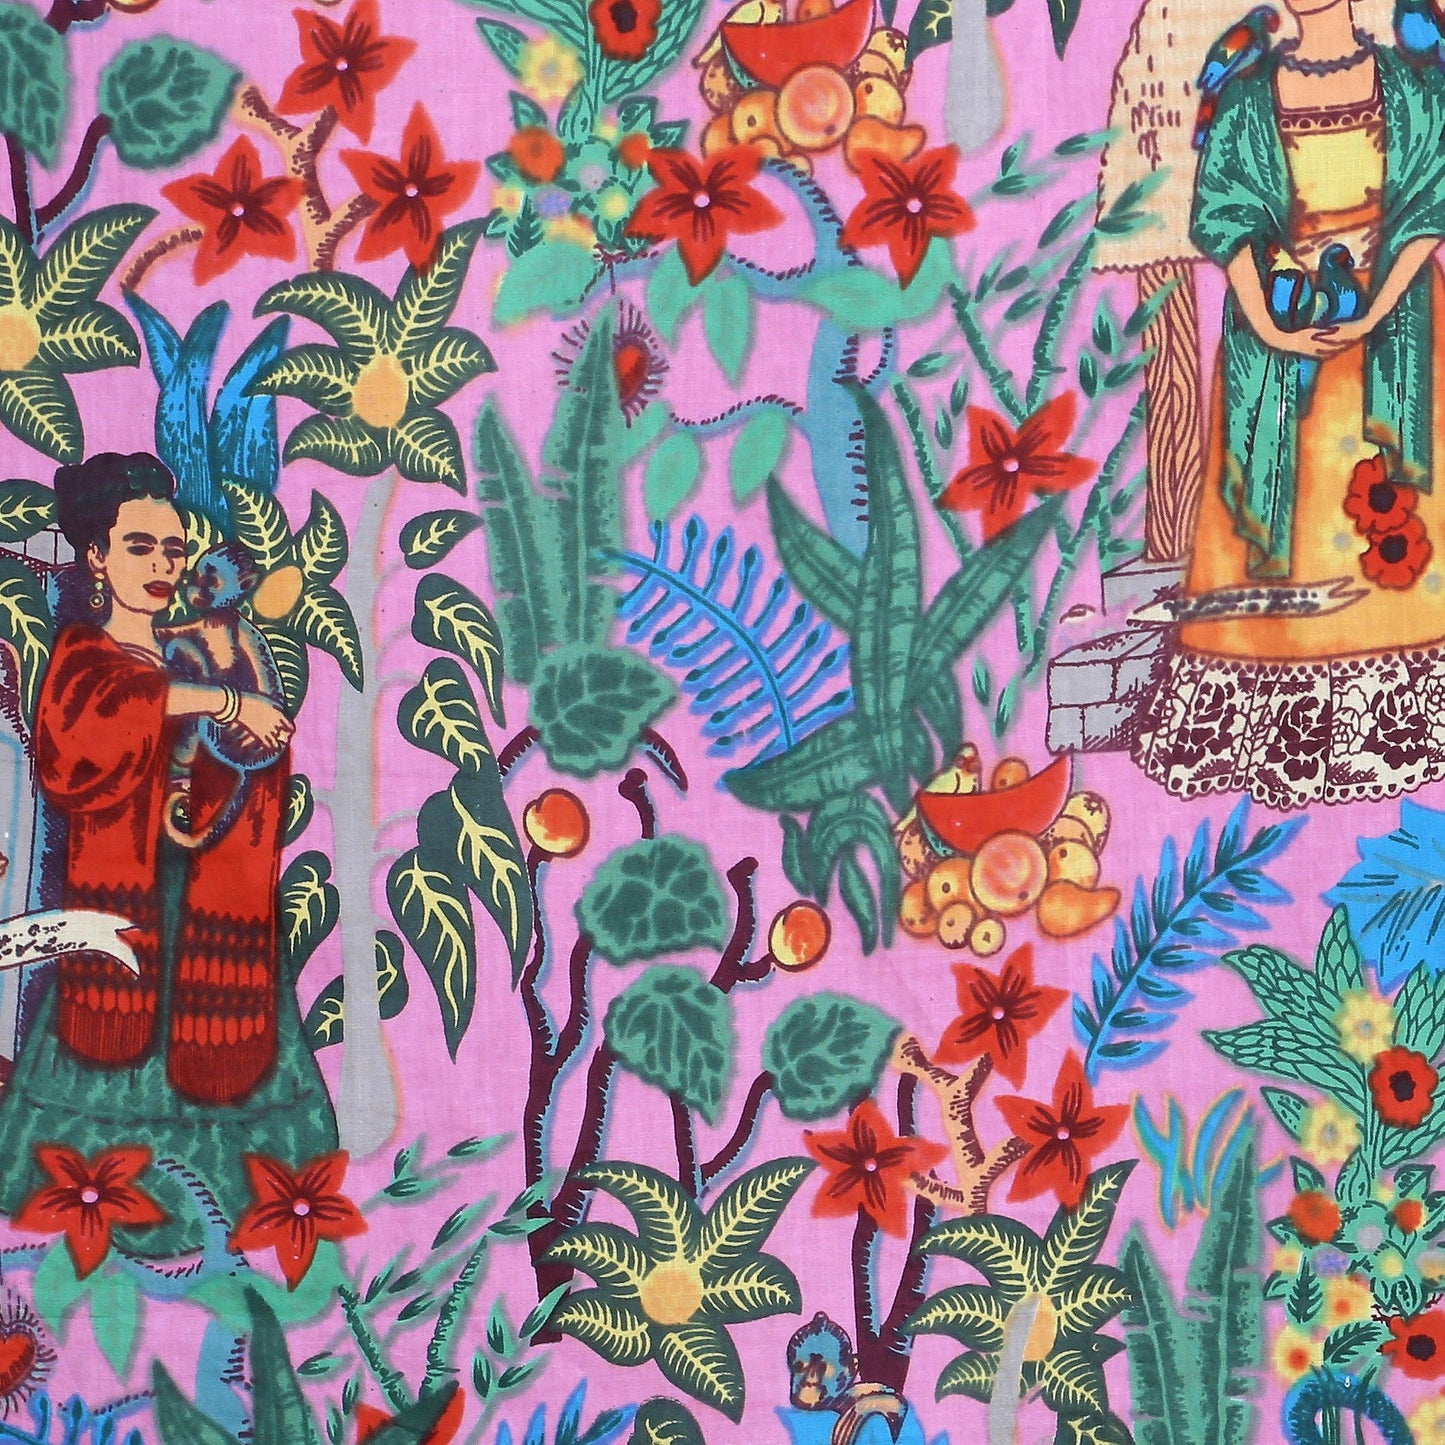 Frida Kahlo Voile Curtain Pair Pink - The Teal Thread